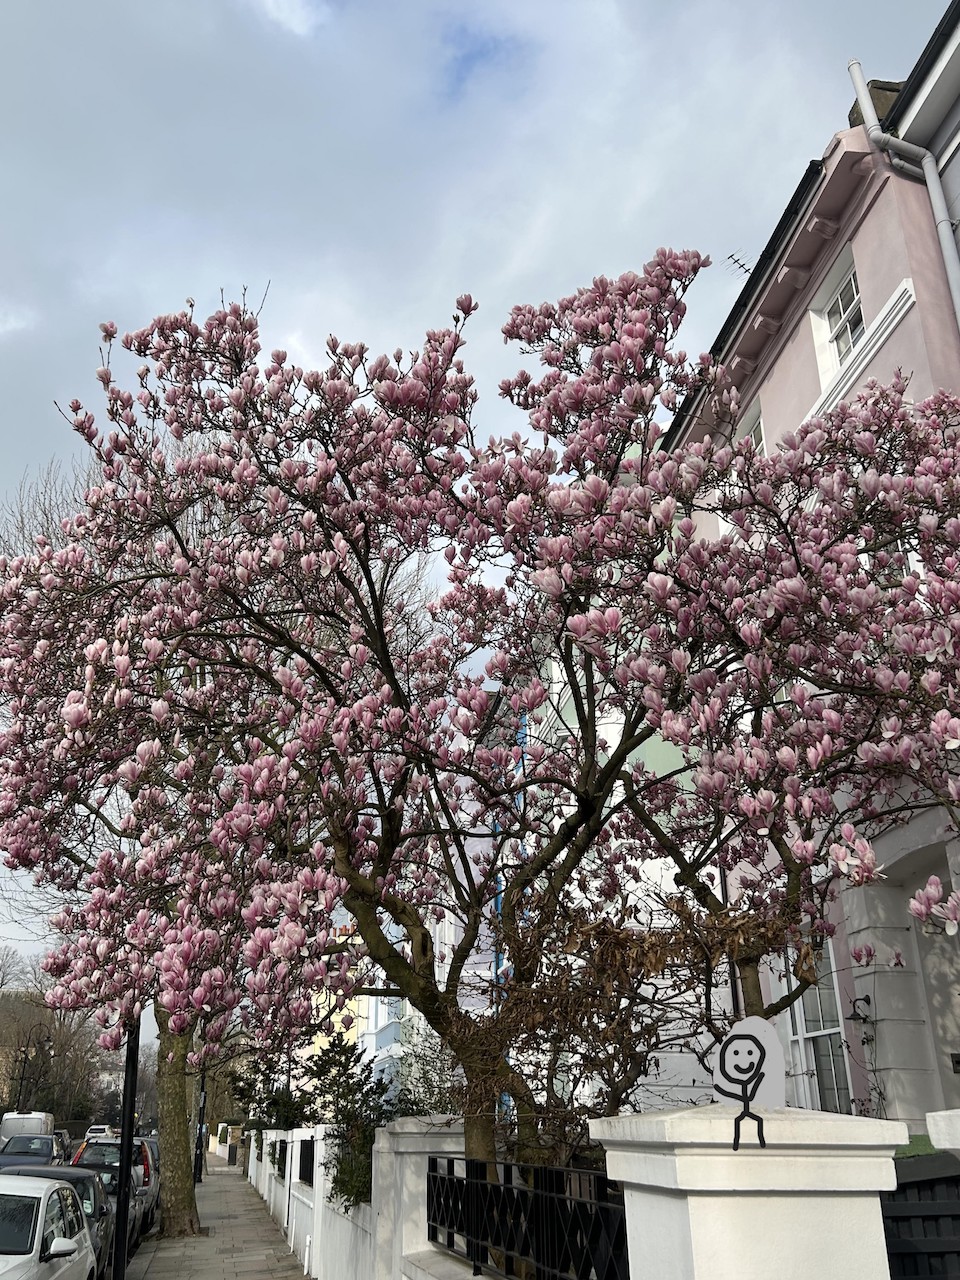 A magnolia tree in full bloom